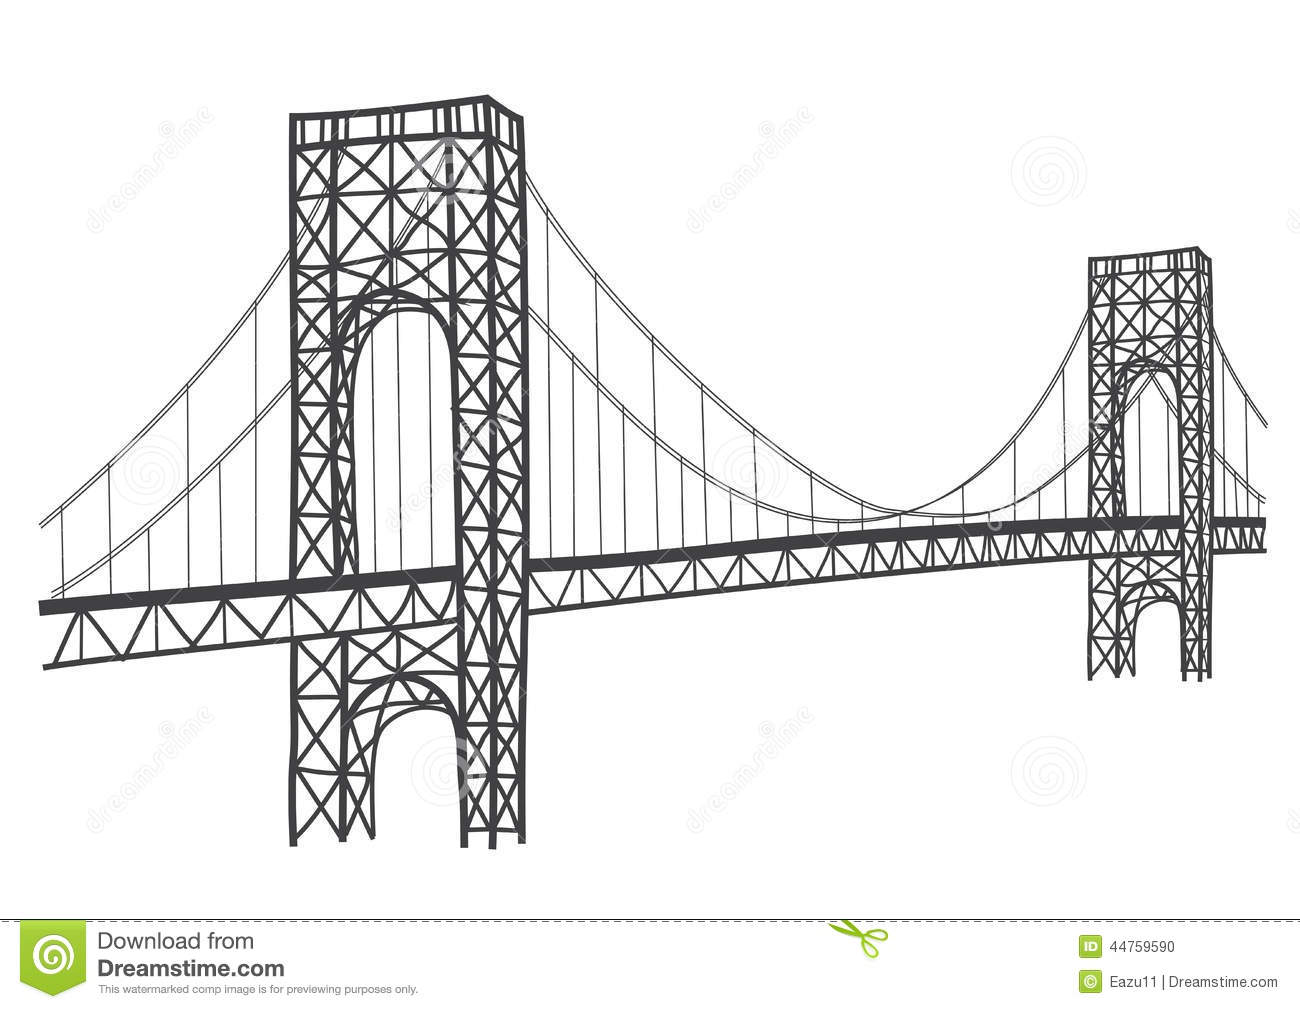 Image of bridges clipart 1 ol